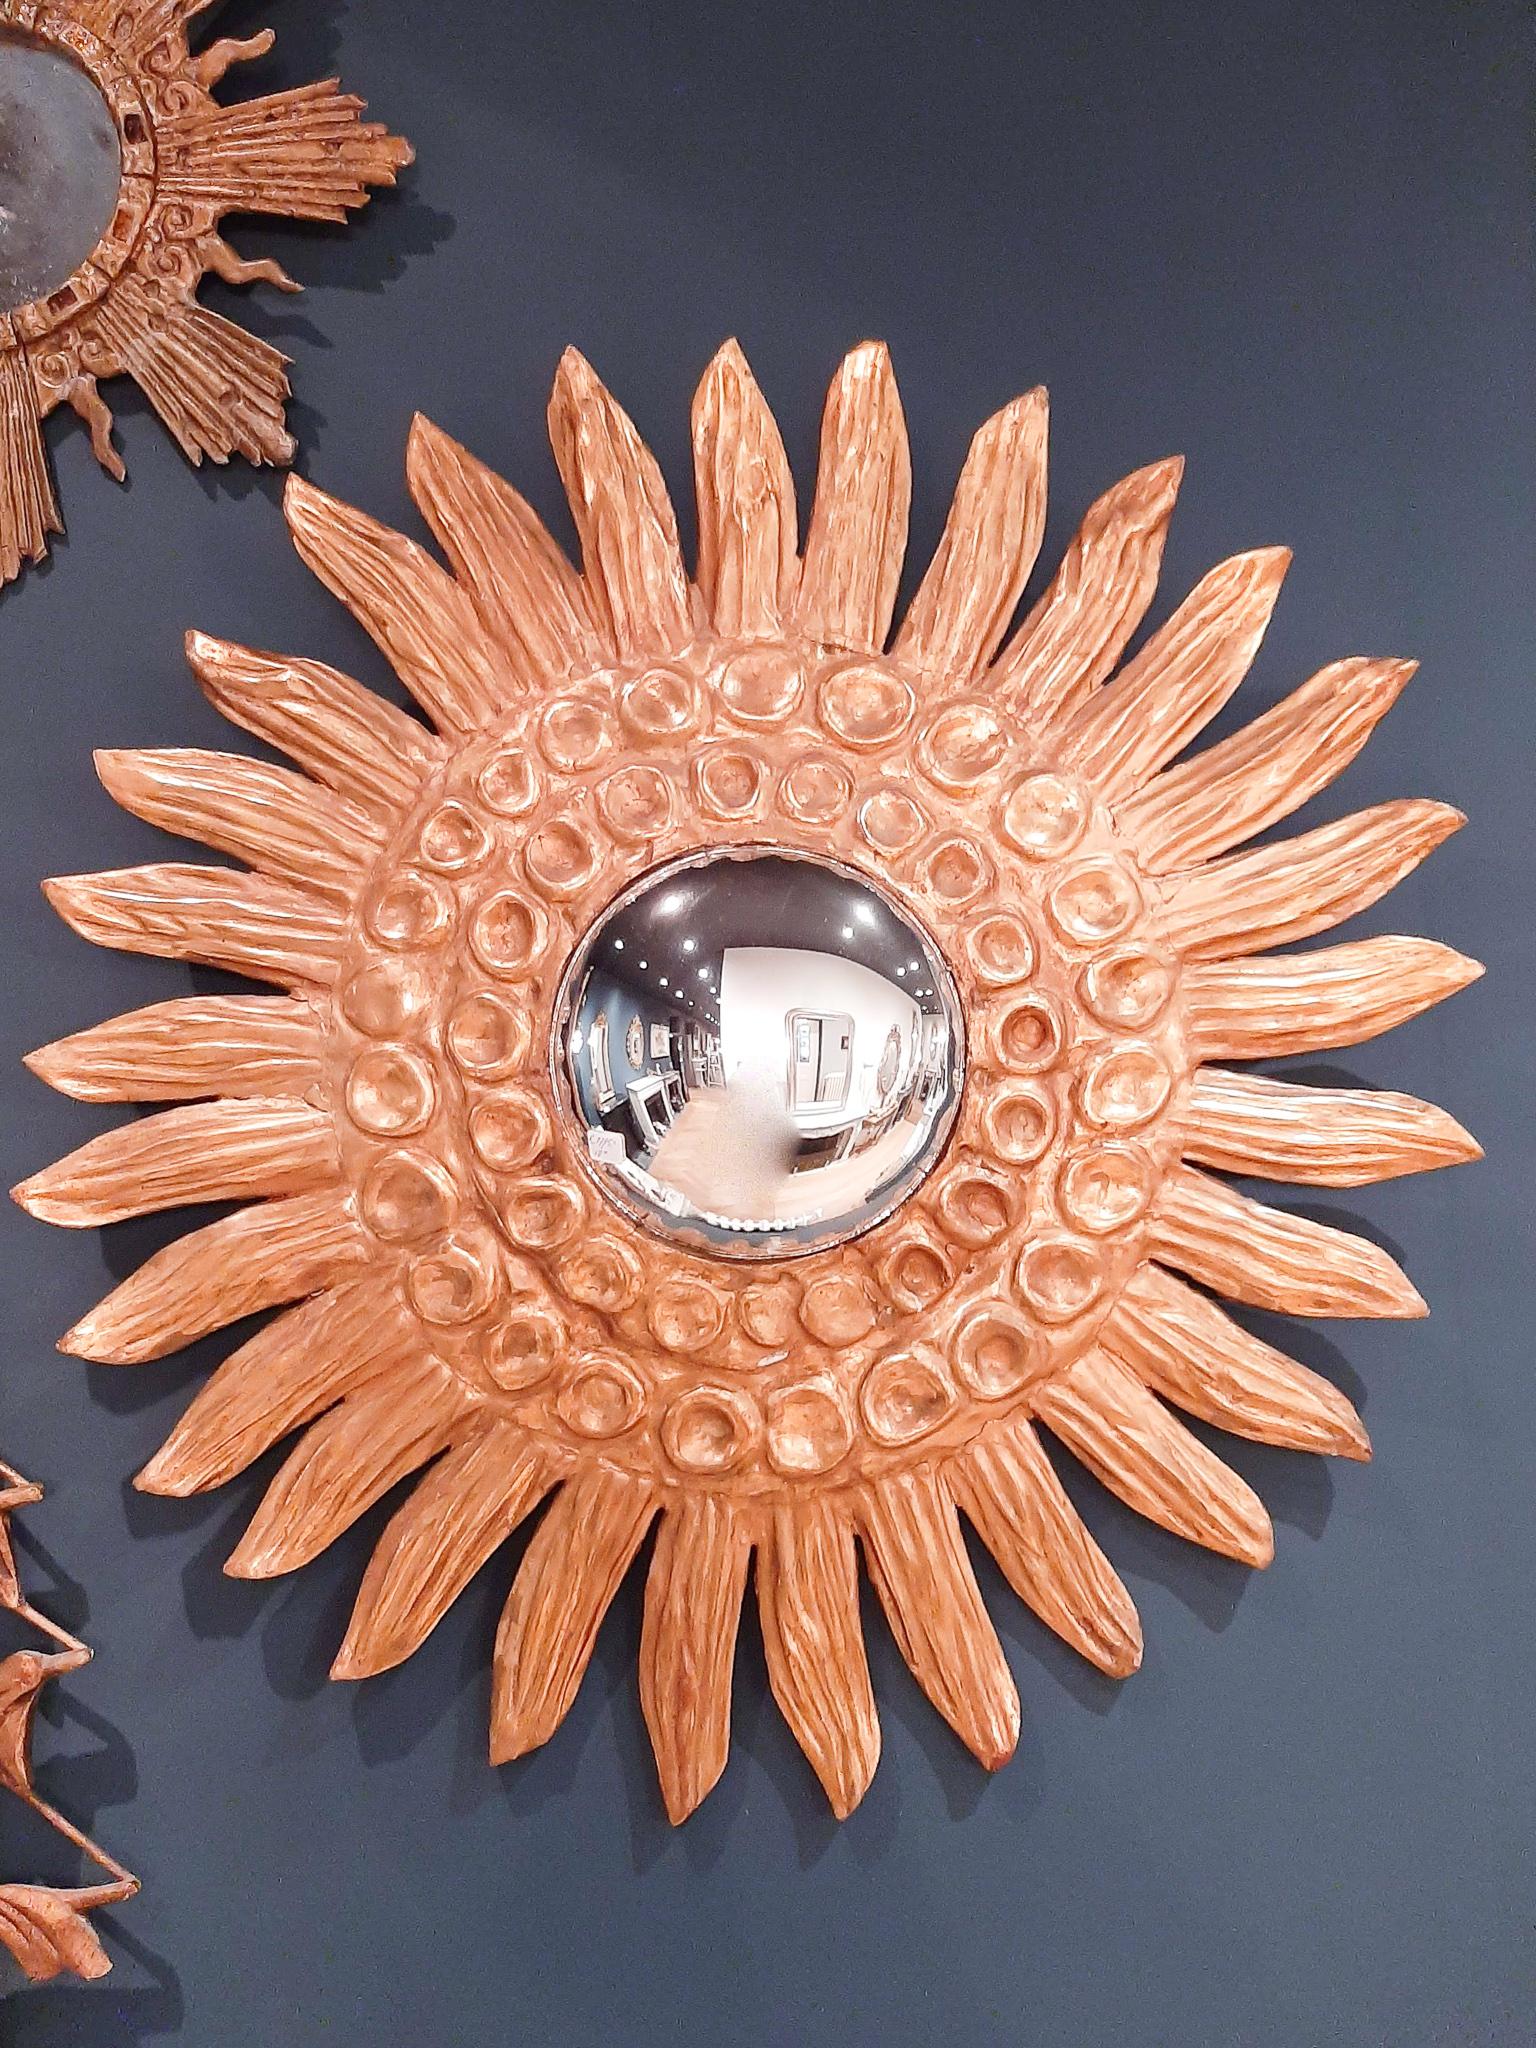 An 18th century carved and gilded wood sunbeam or sunburst convex mirror.

Measures: Diameter 75 cm
Diameter convex glass 21 cm.